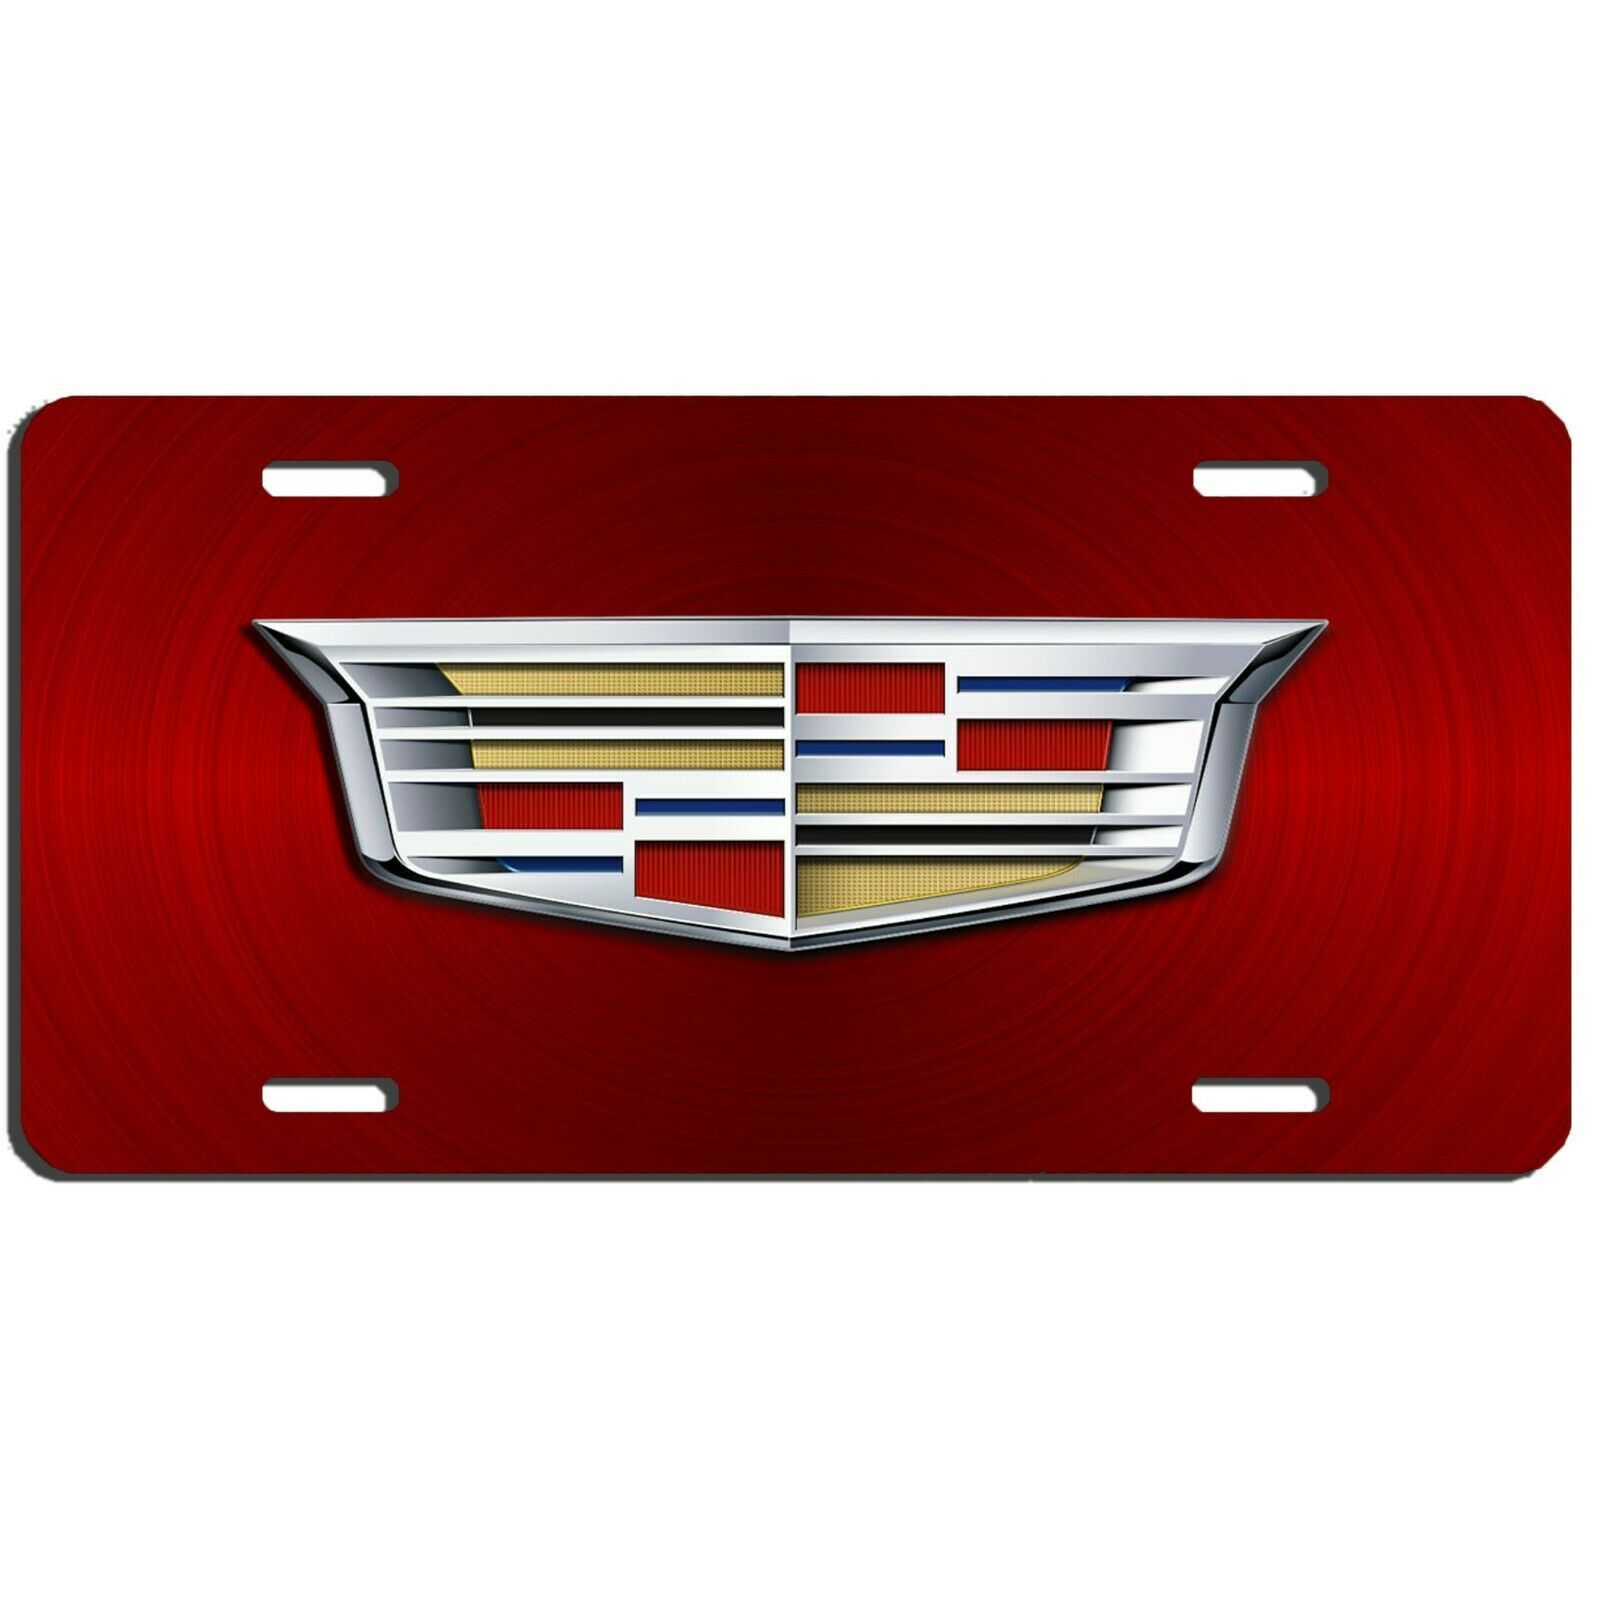 Cadillac auto vehicle art aluminum license plate, red swirl car truck SUV ,tag  - $16.58